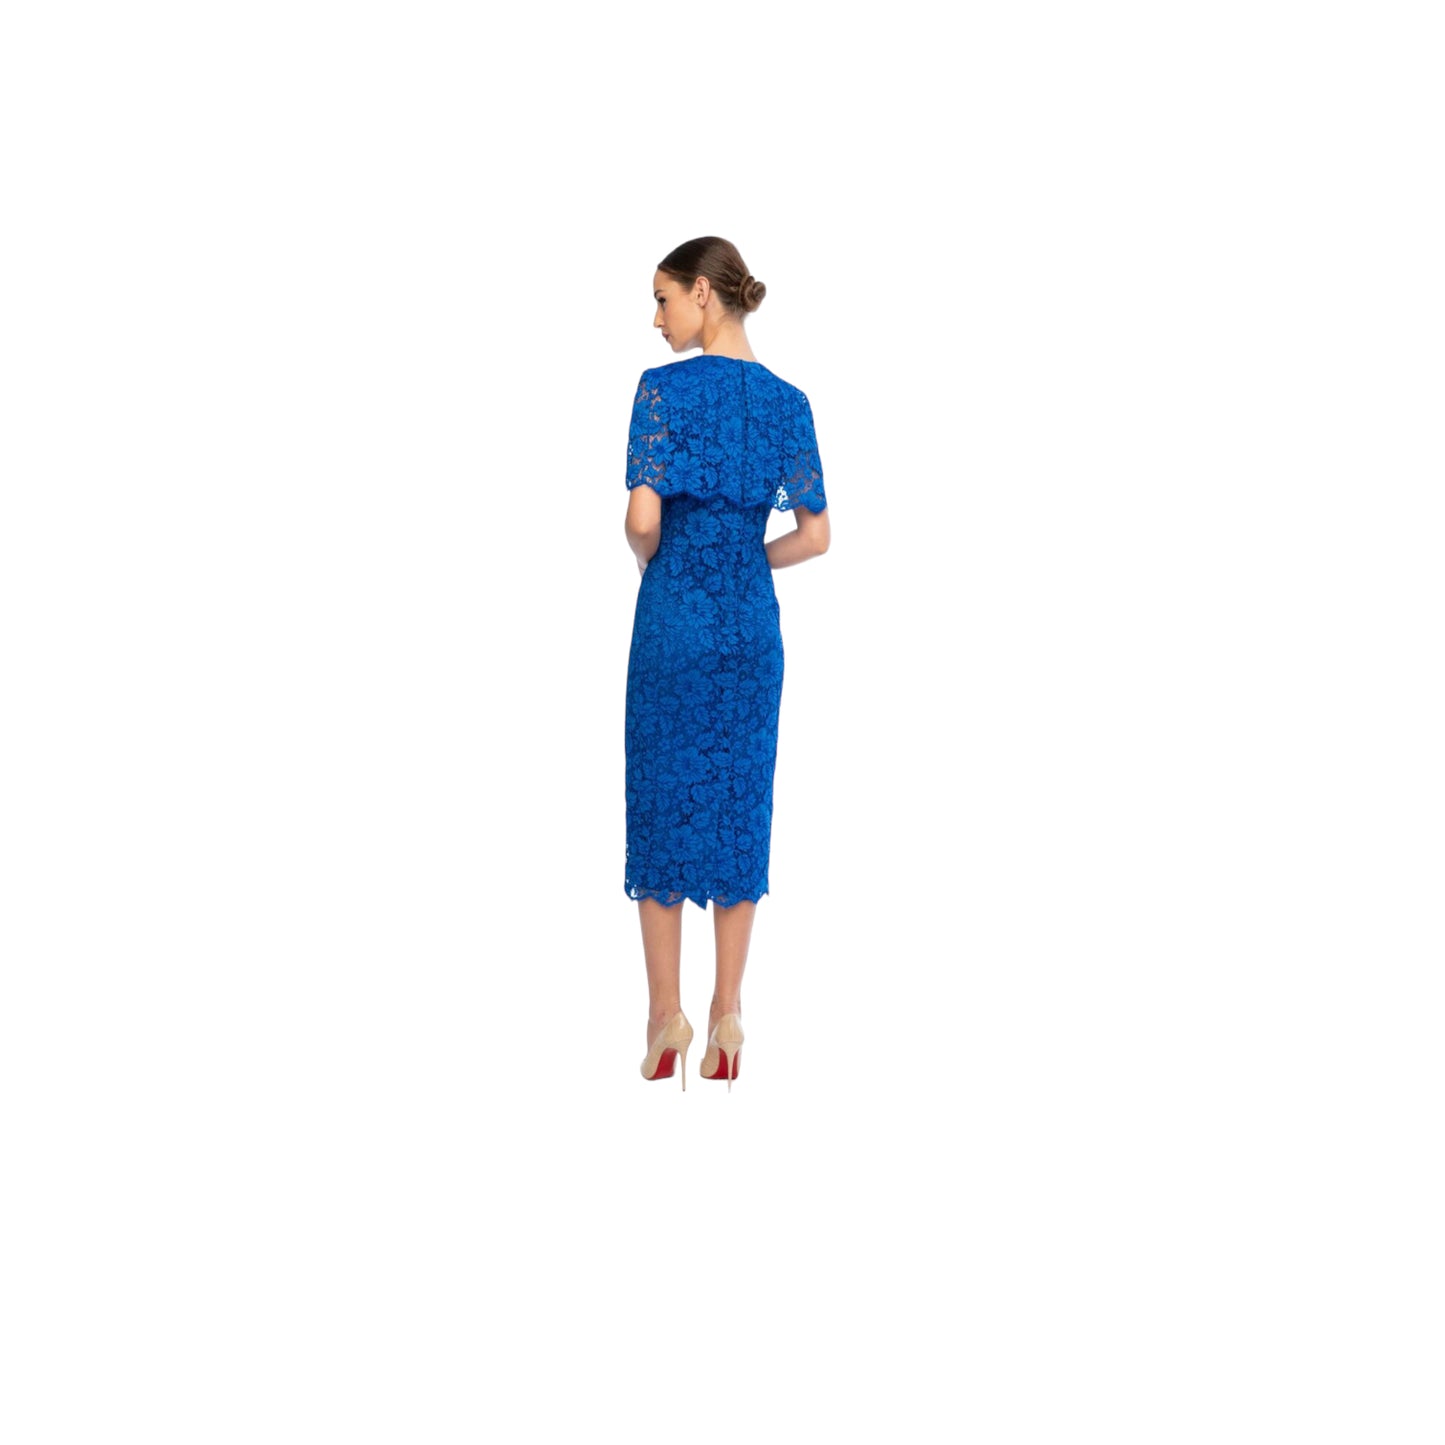 CURRENT SEASON Louise Kennedy Cobalt Blue Lace Dress